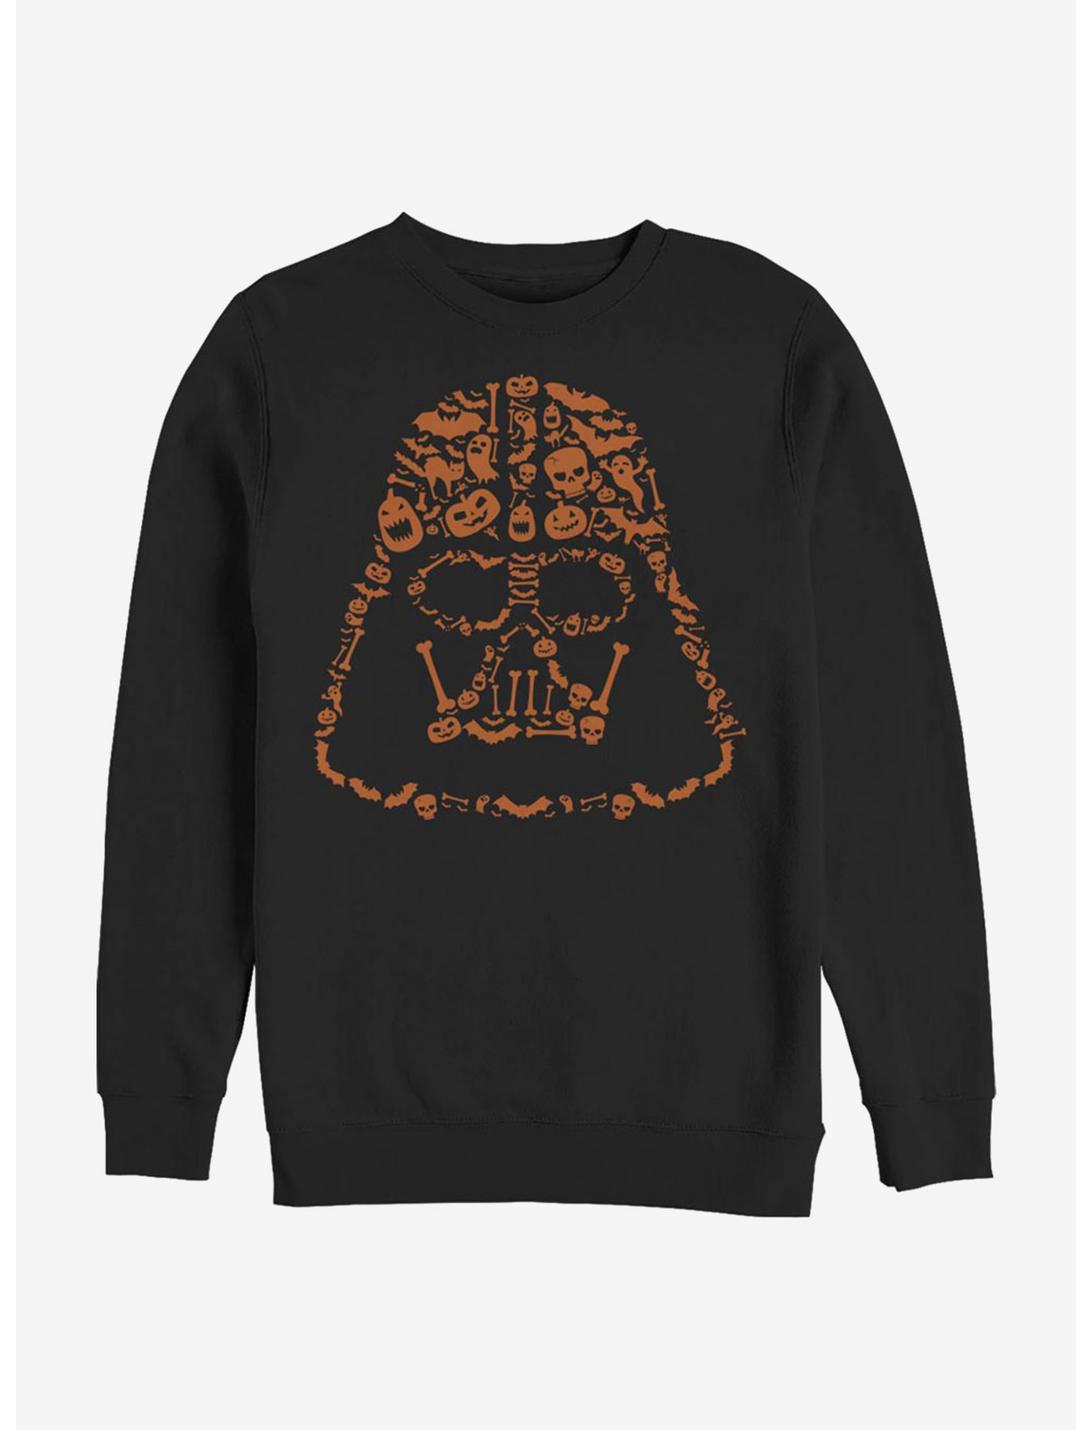 Star Wars Darth Vader Jackolanterns Sweatshirt, BLACK, hi-res